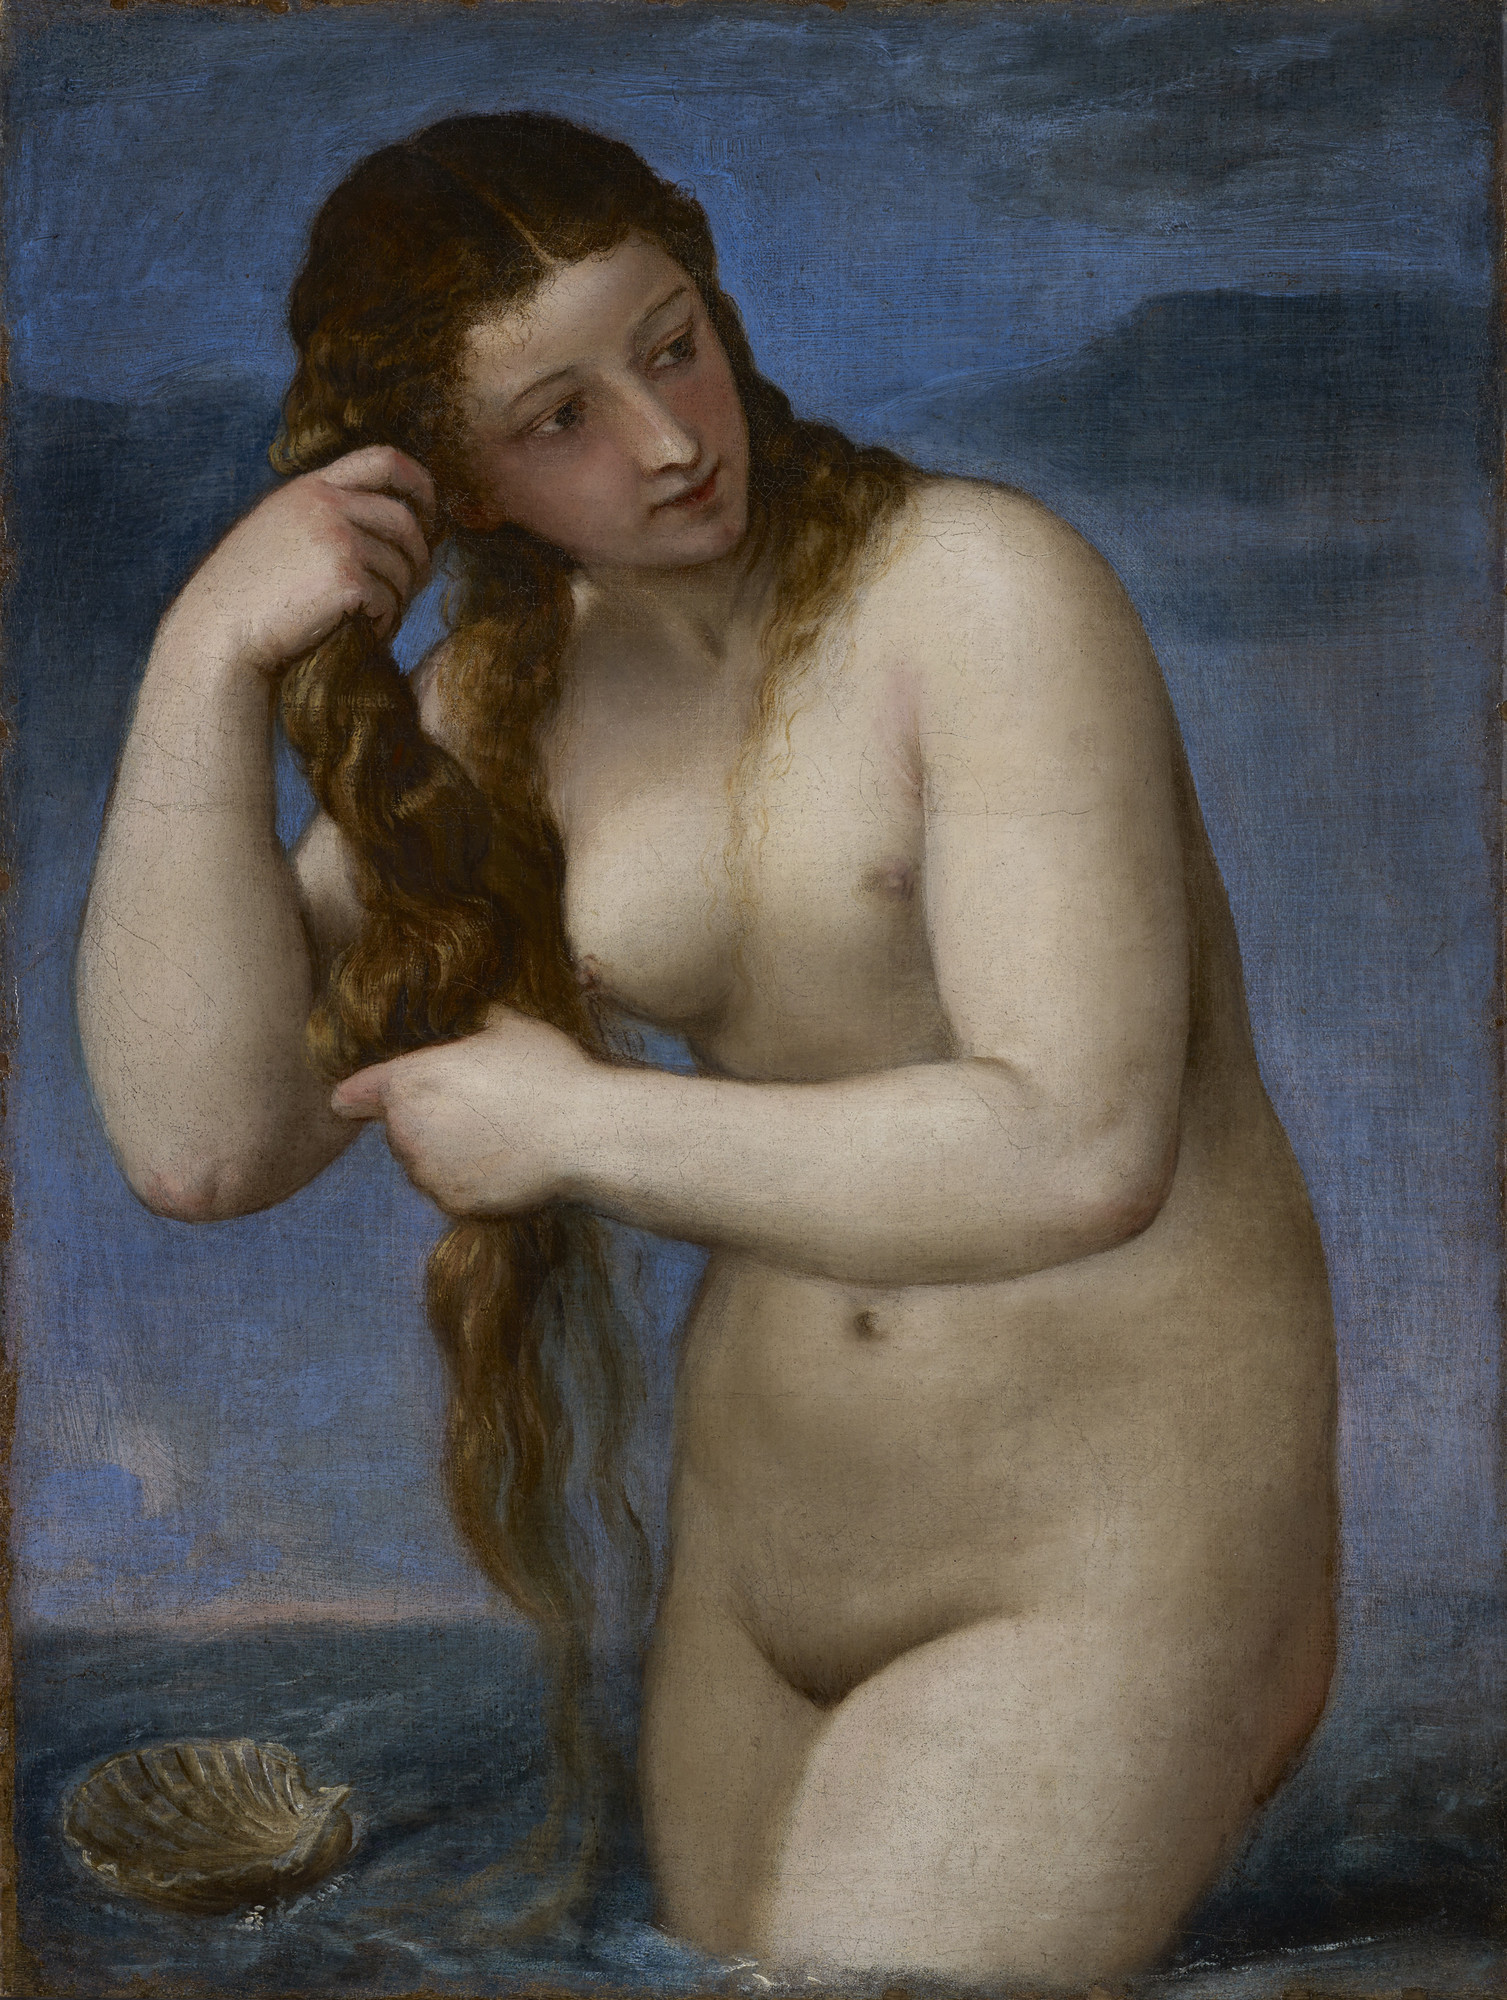 Renaissance Nude